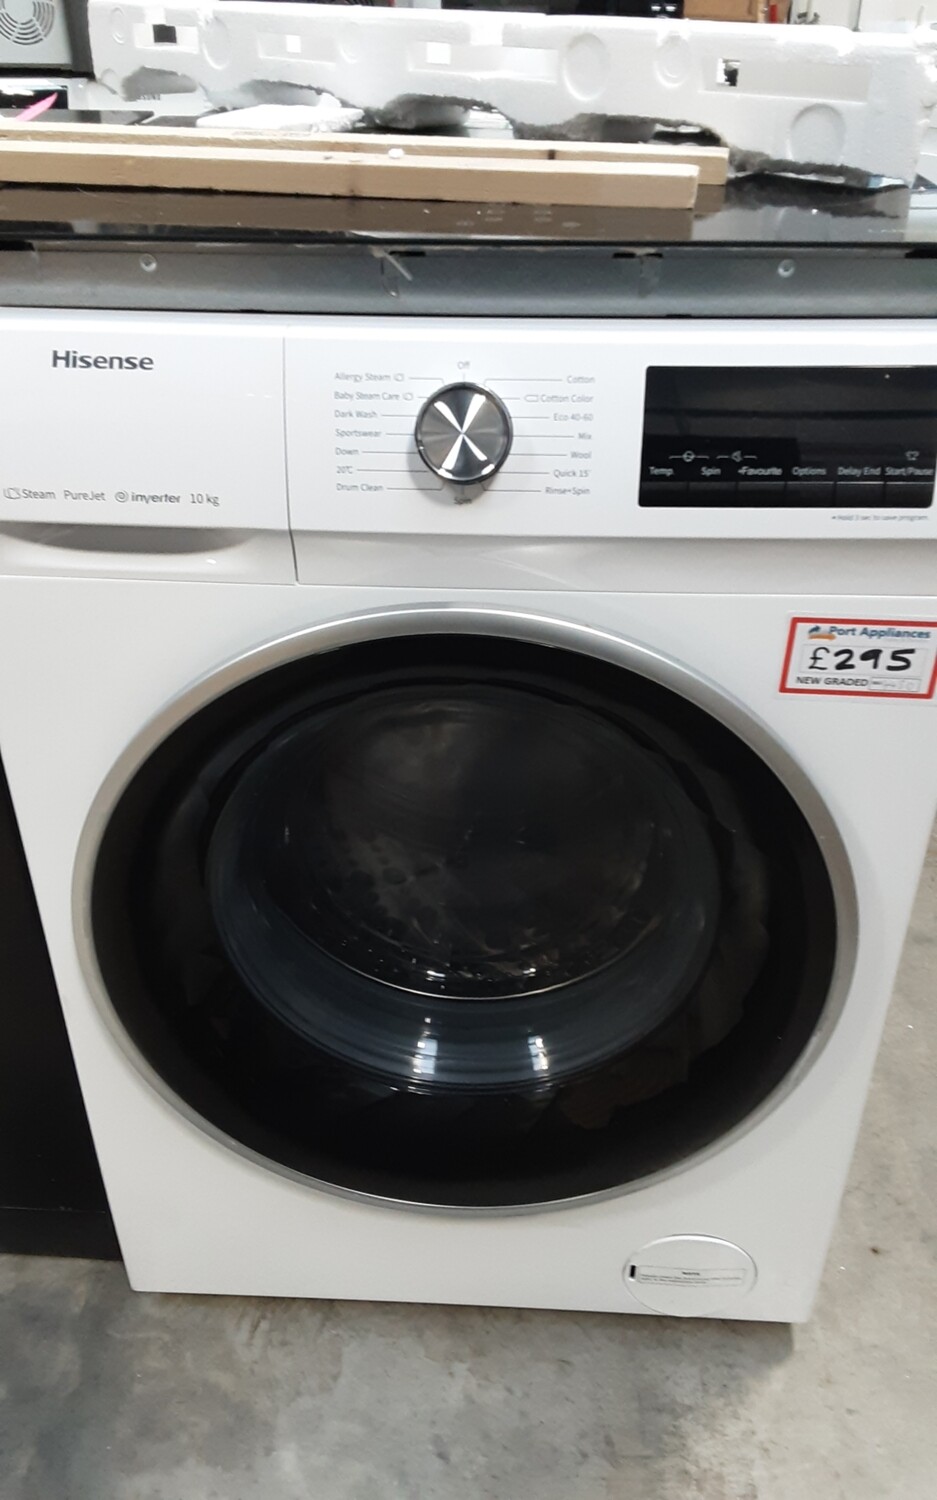 Hisense WFQY1014EVJM 10kg Load, 1400 Spin Washing Machine - White - New Graded + 1 Year Guarantee